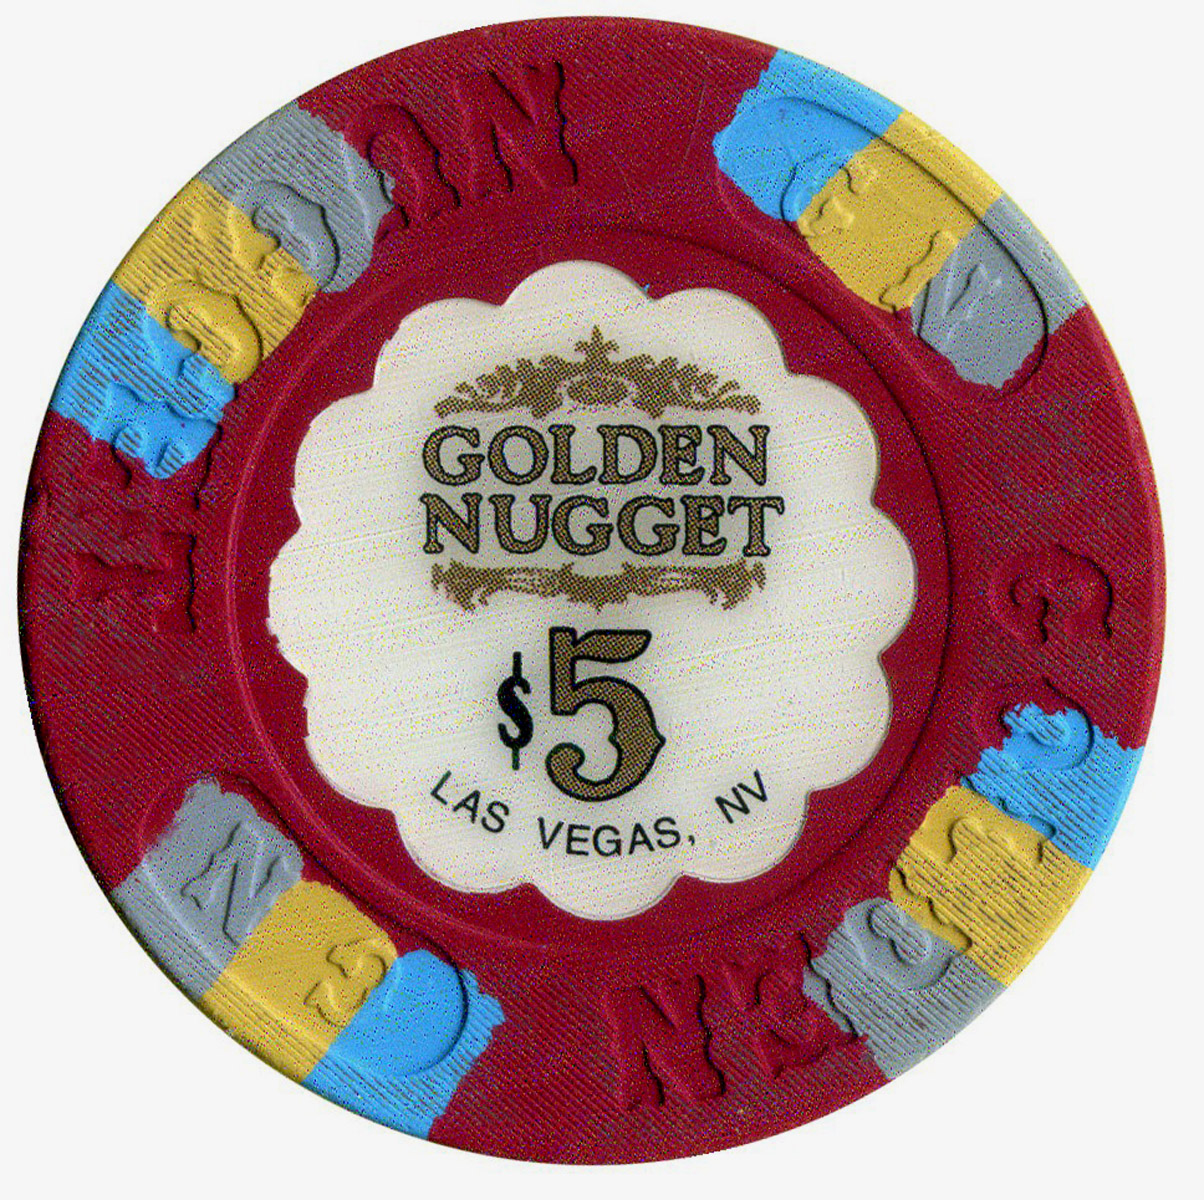 Golden Nugget 24K Club Phone Number